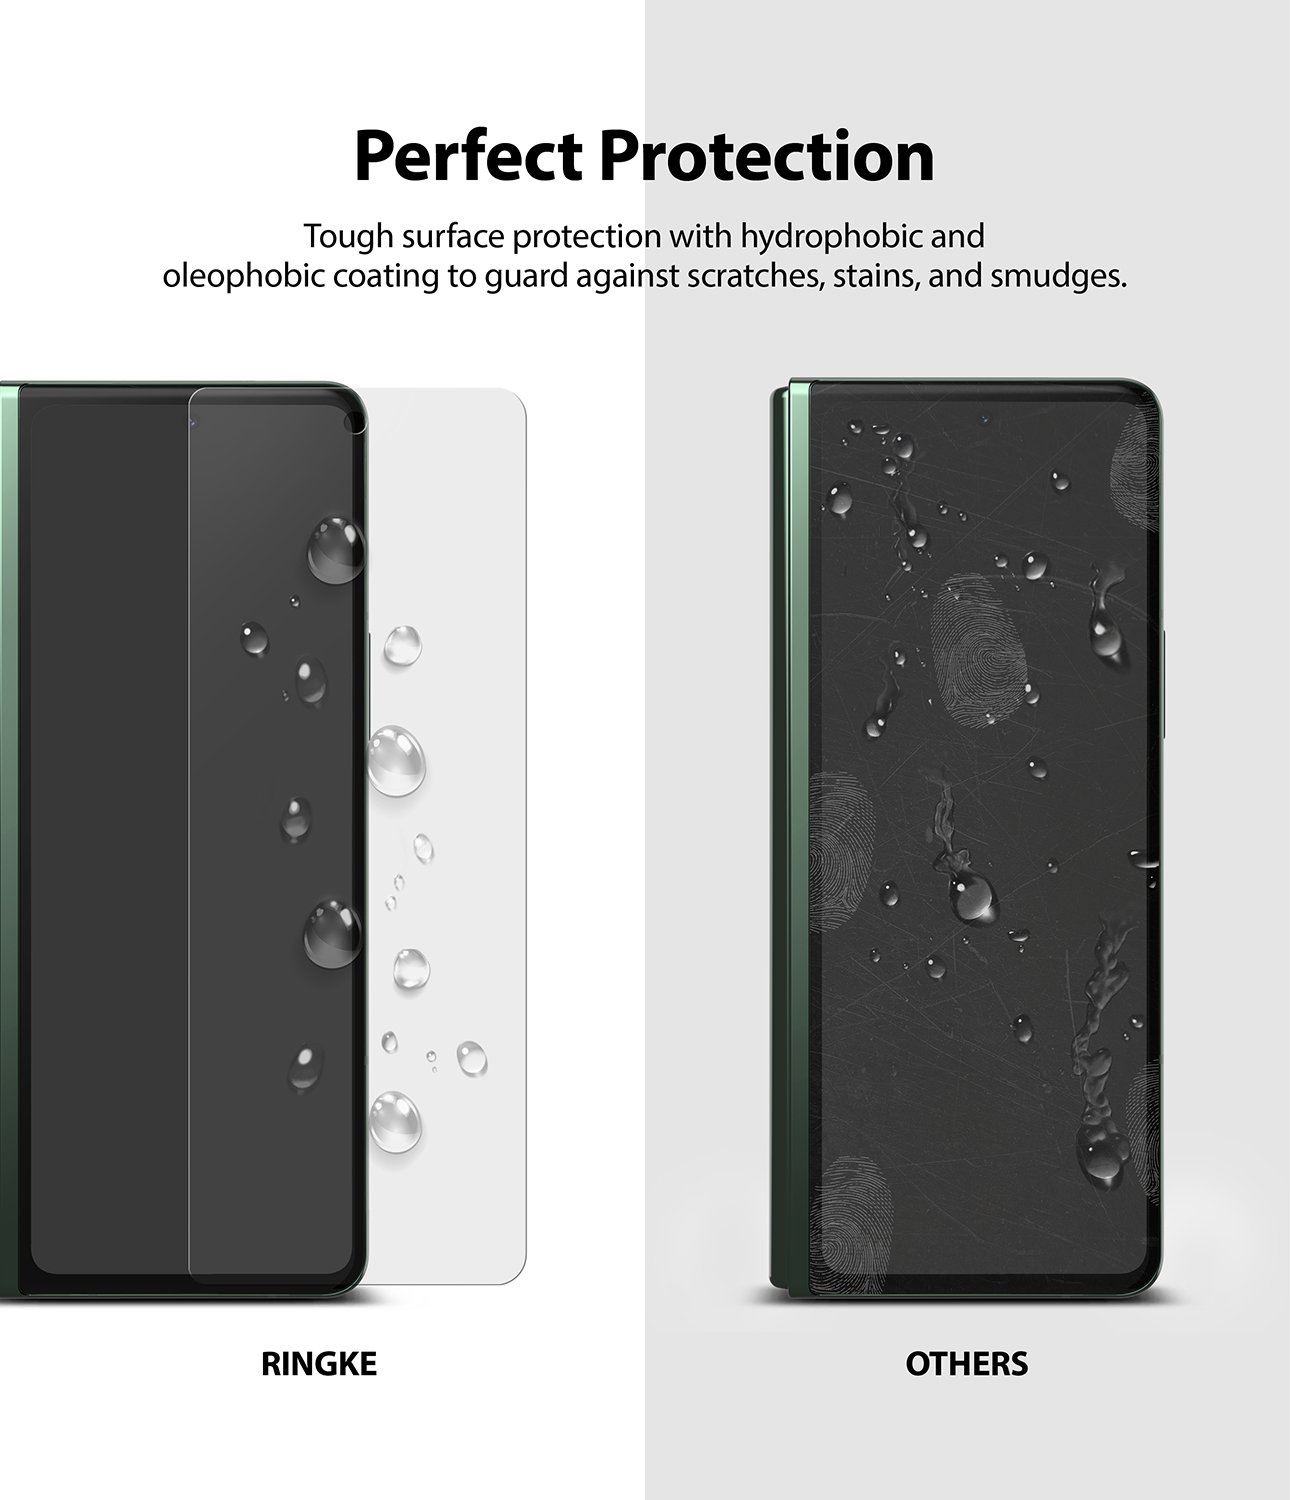 Samsung Galaxy Z Fold 3 ID Screen Protector